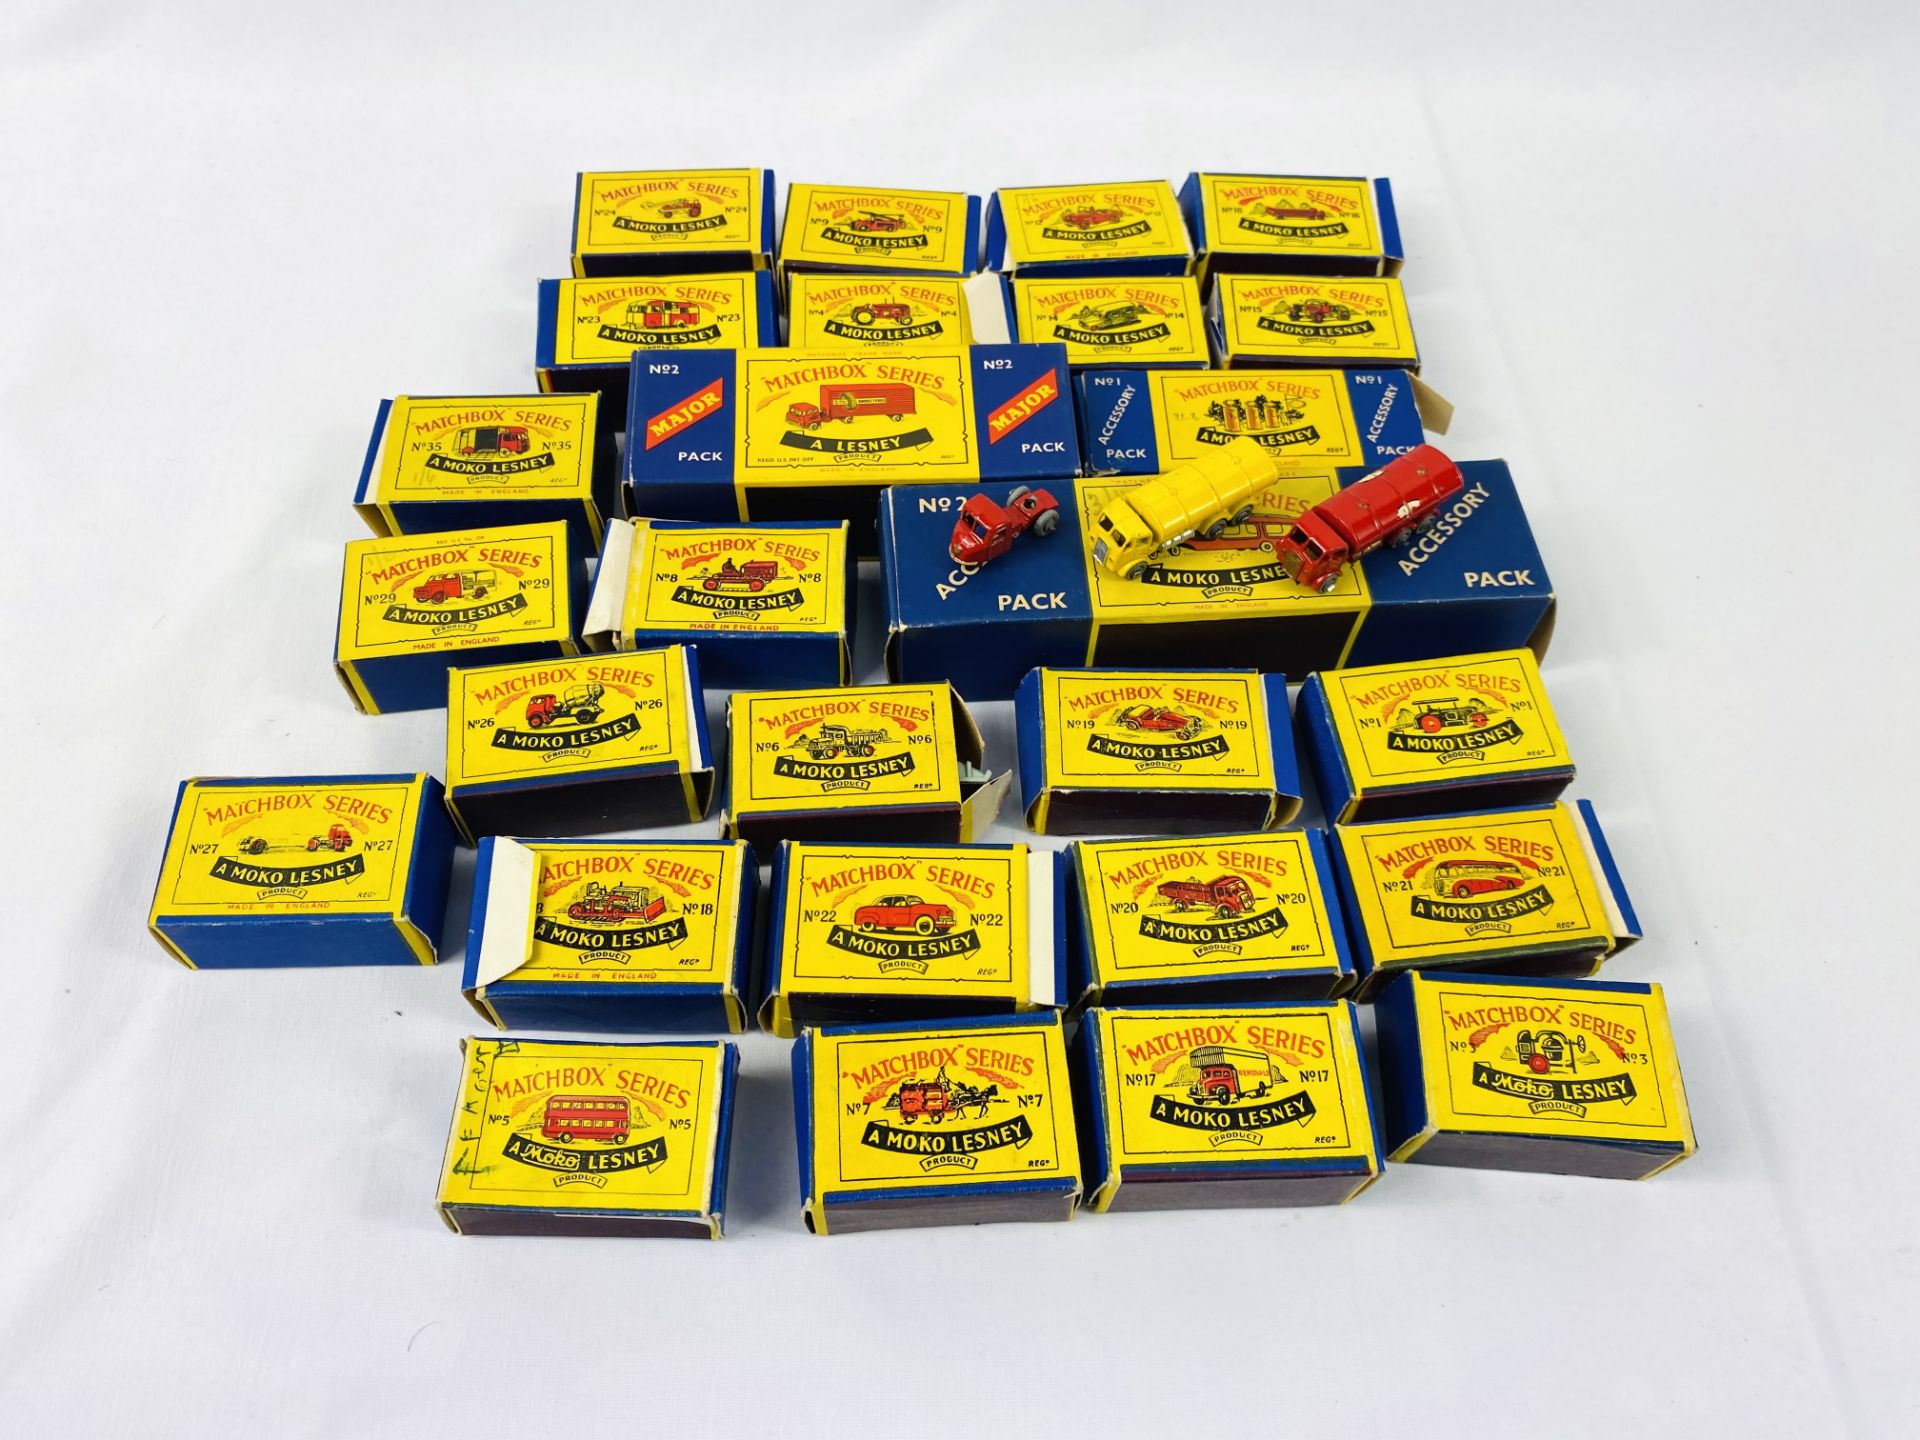 Quantity of boxed Matchbox Series vehicles